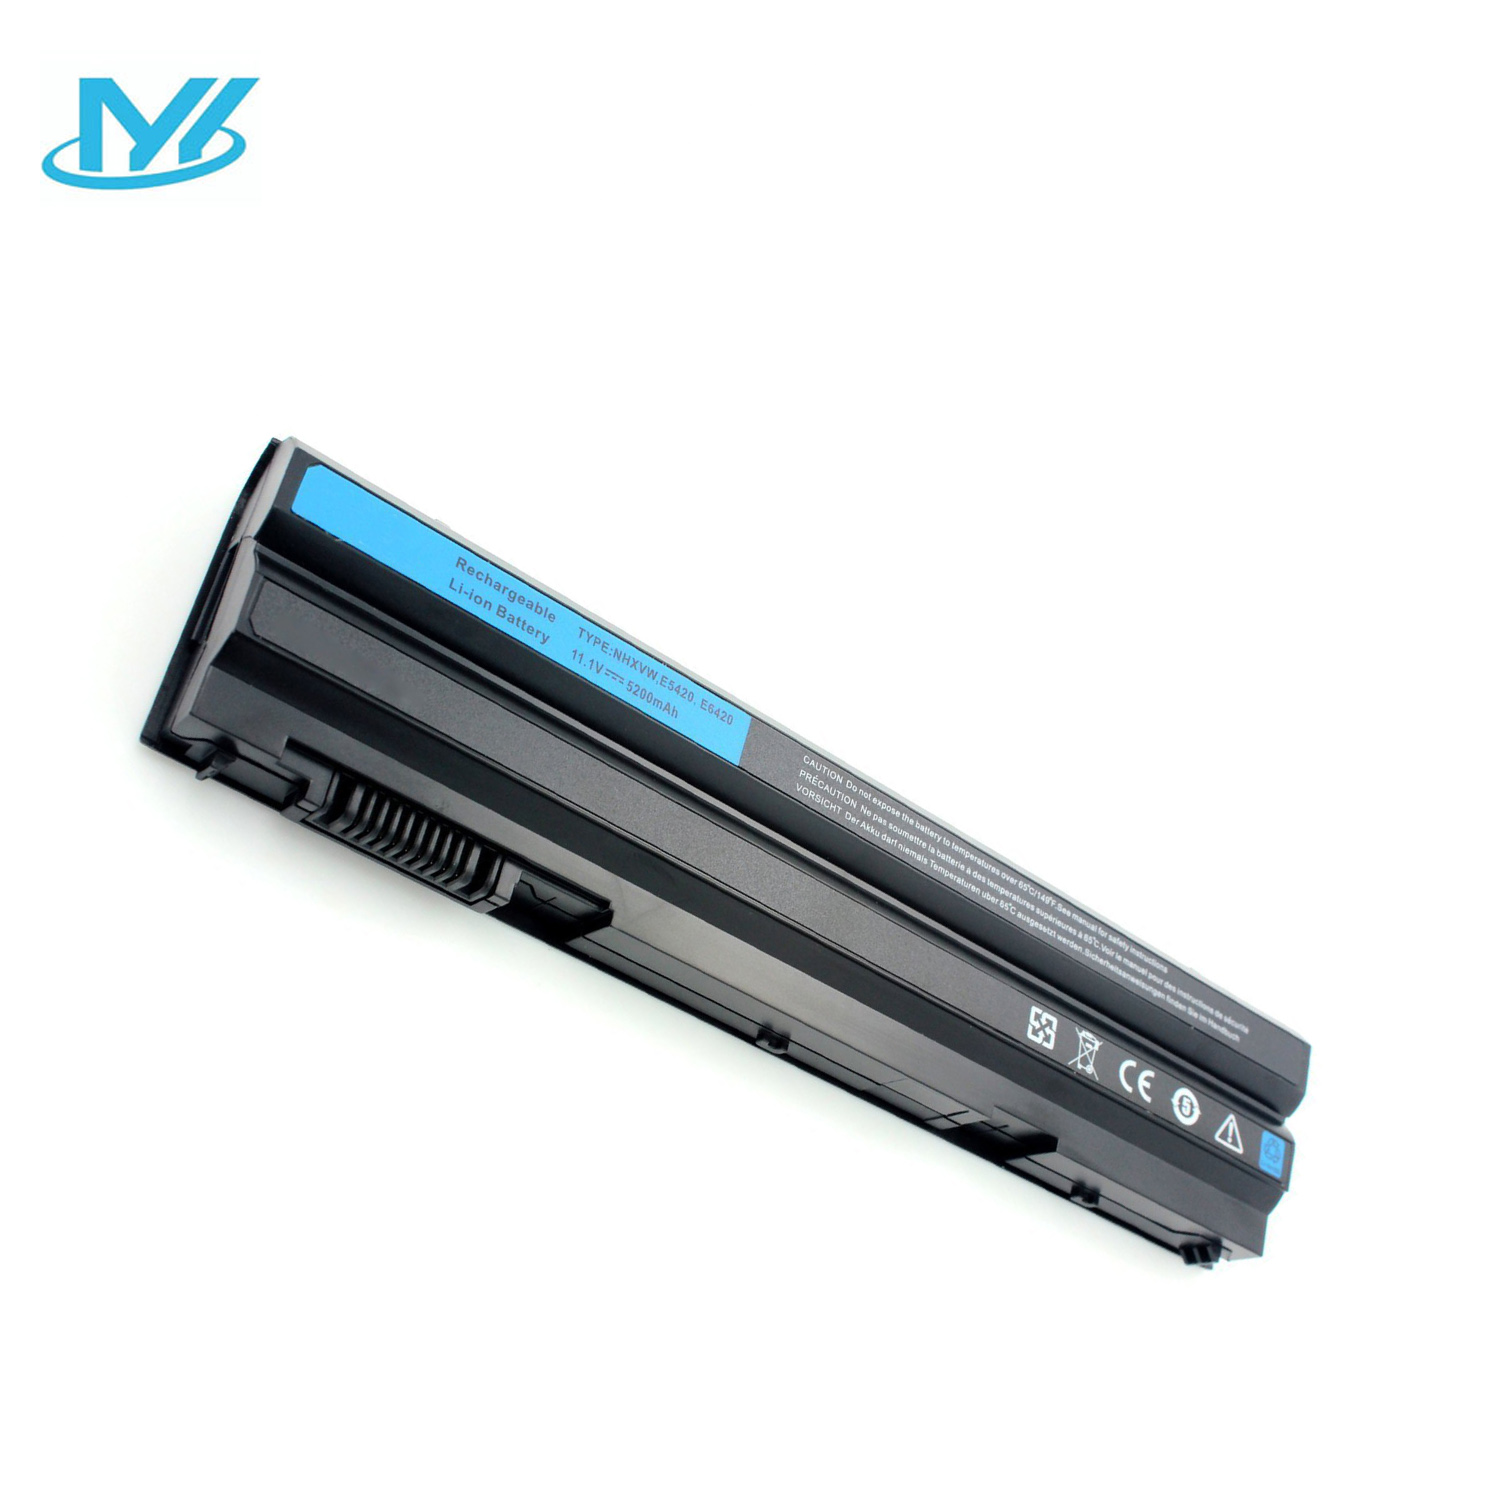 NHXVW laptop battery lithium ion batteries 11.1V 5200mAh for DELL Latitude E6420 E6520 E5420 E5520 E6430